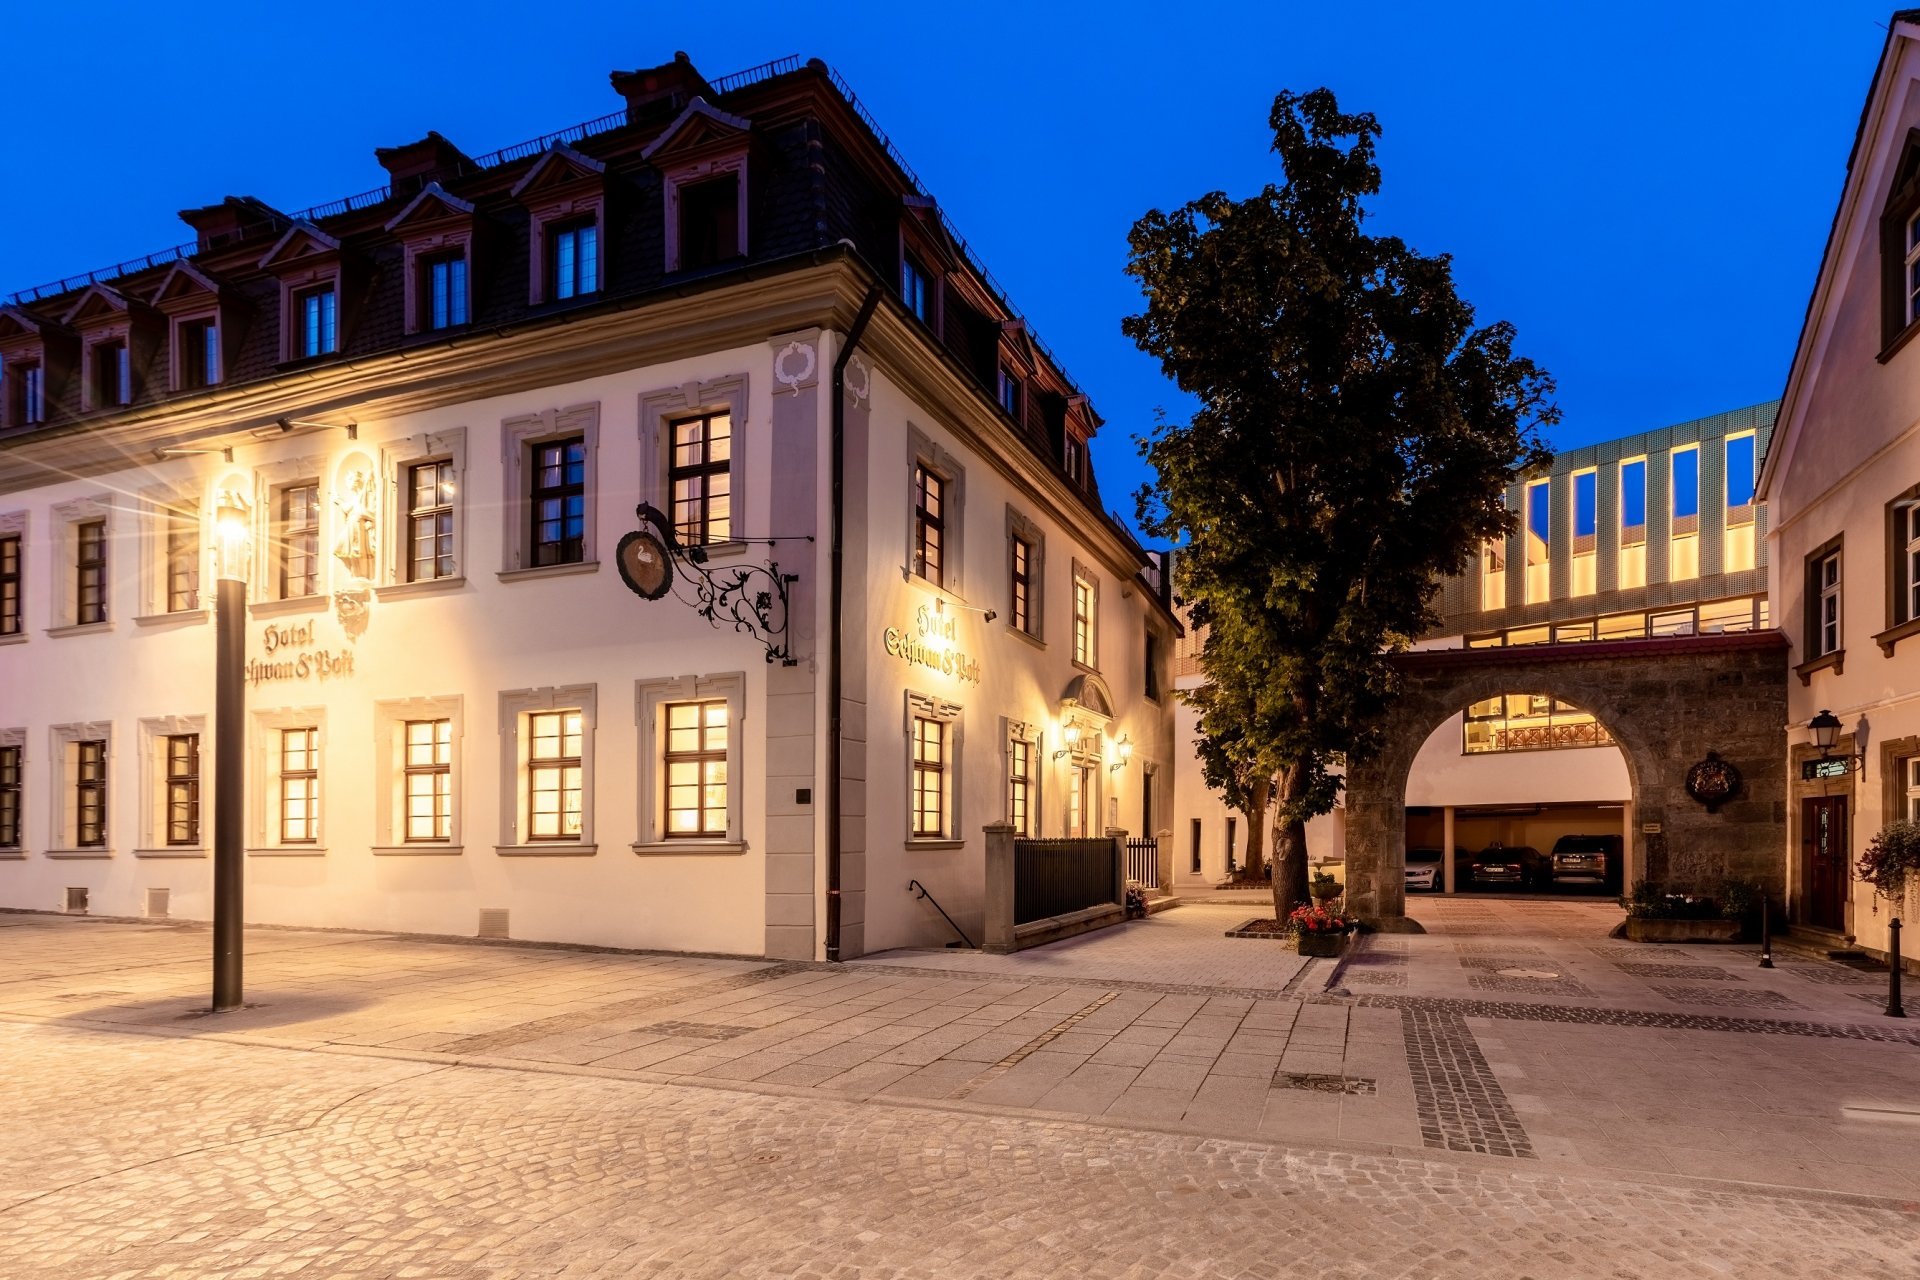 2 Tage Seniorenzauber® –  Schwan &amp, Post Business Quarters  (3 Sterne) in Bad Neustadt an der Saale, Bayern inkl. Halbpension